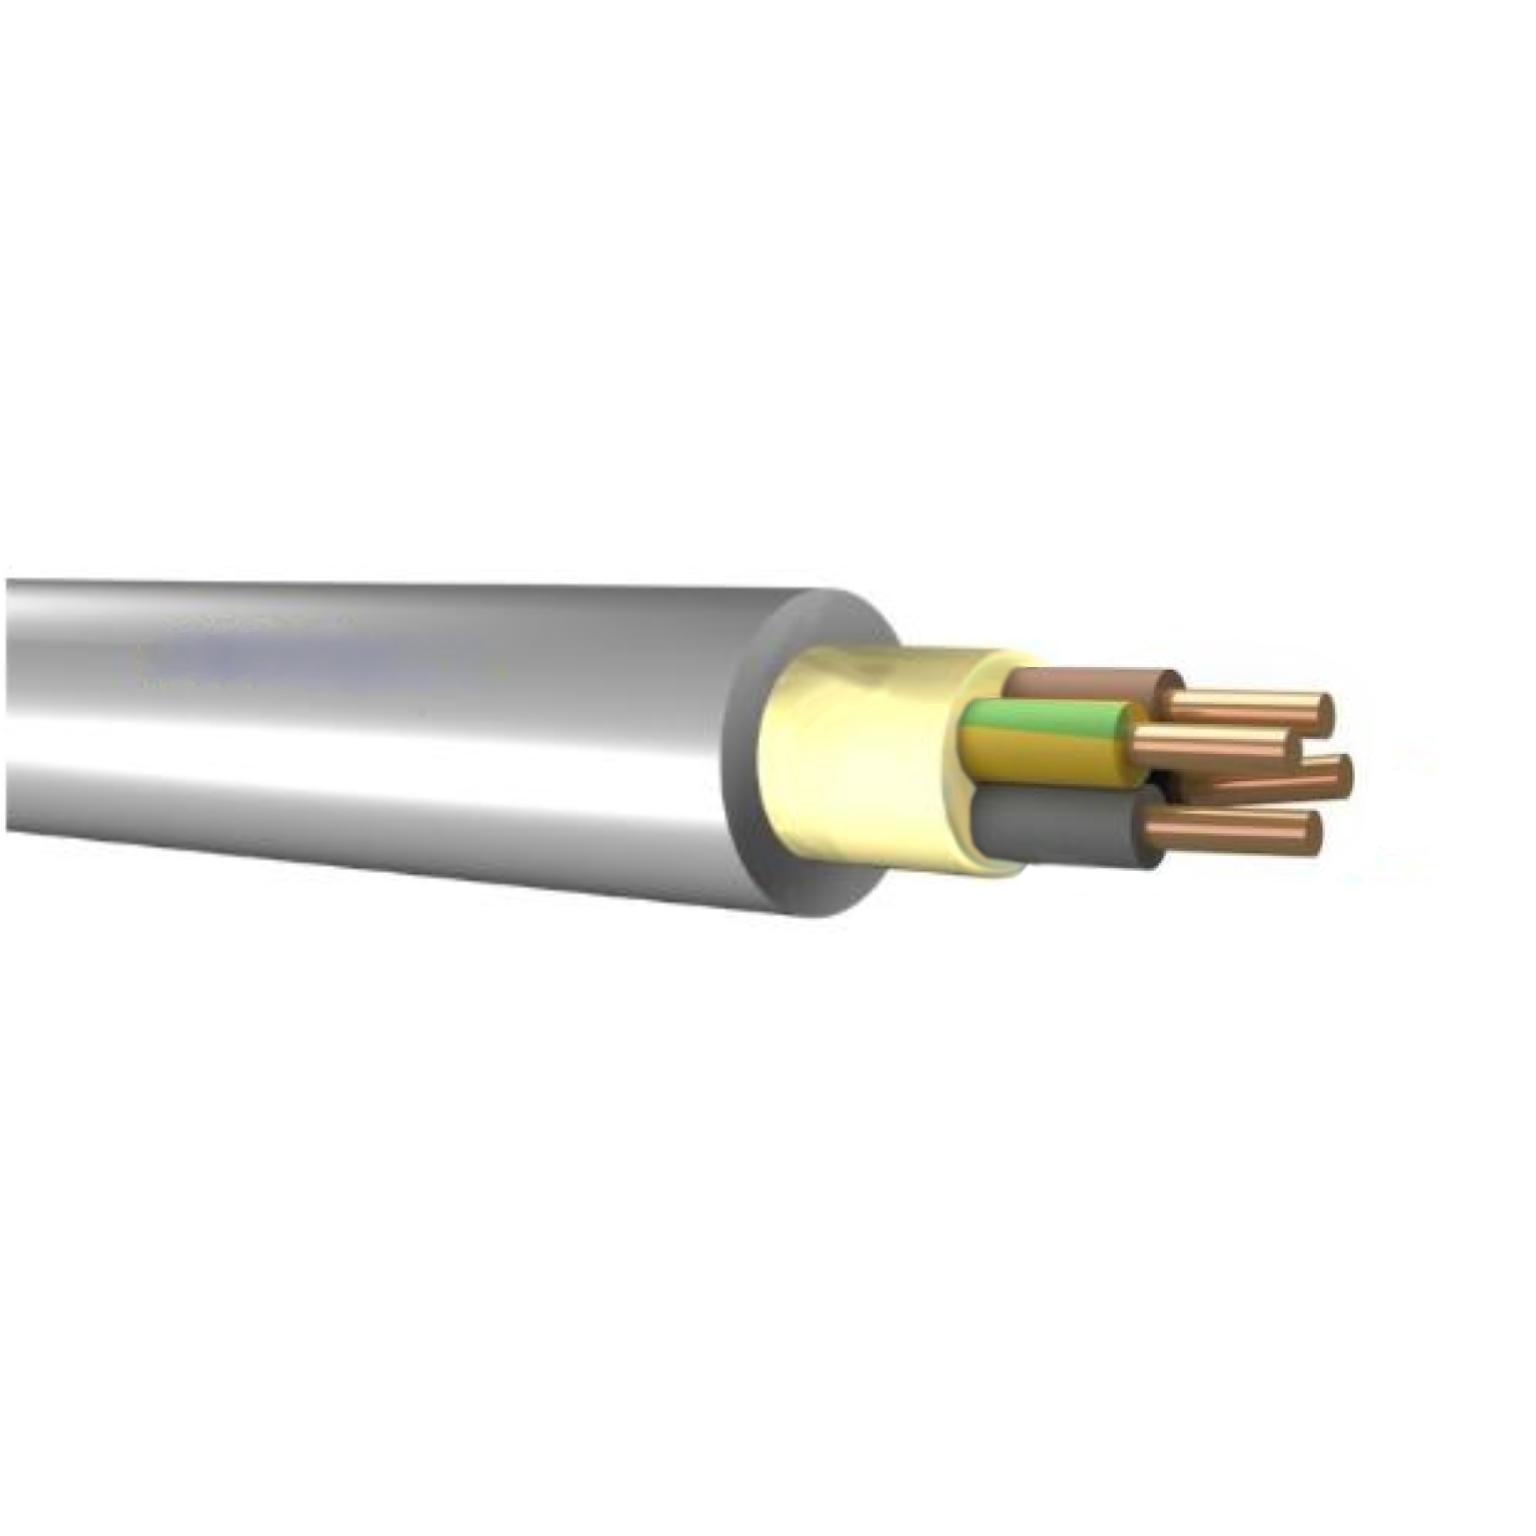 YMVK-Kabel 3 x 4 mm2 – pro meter